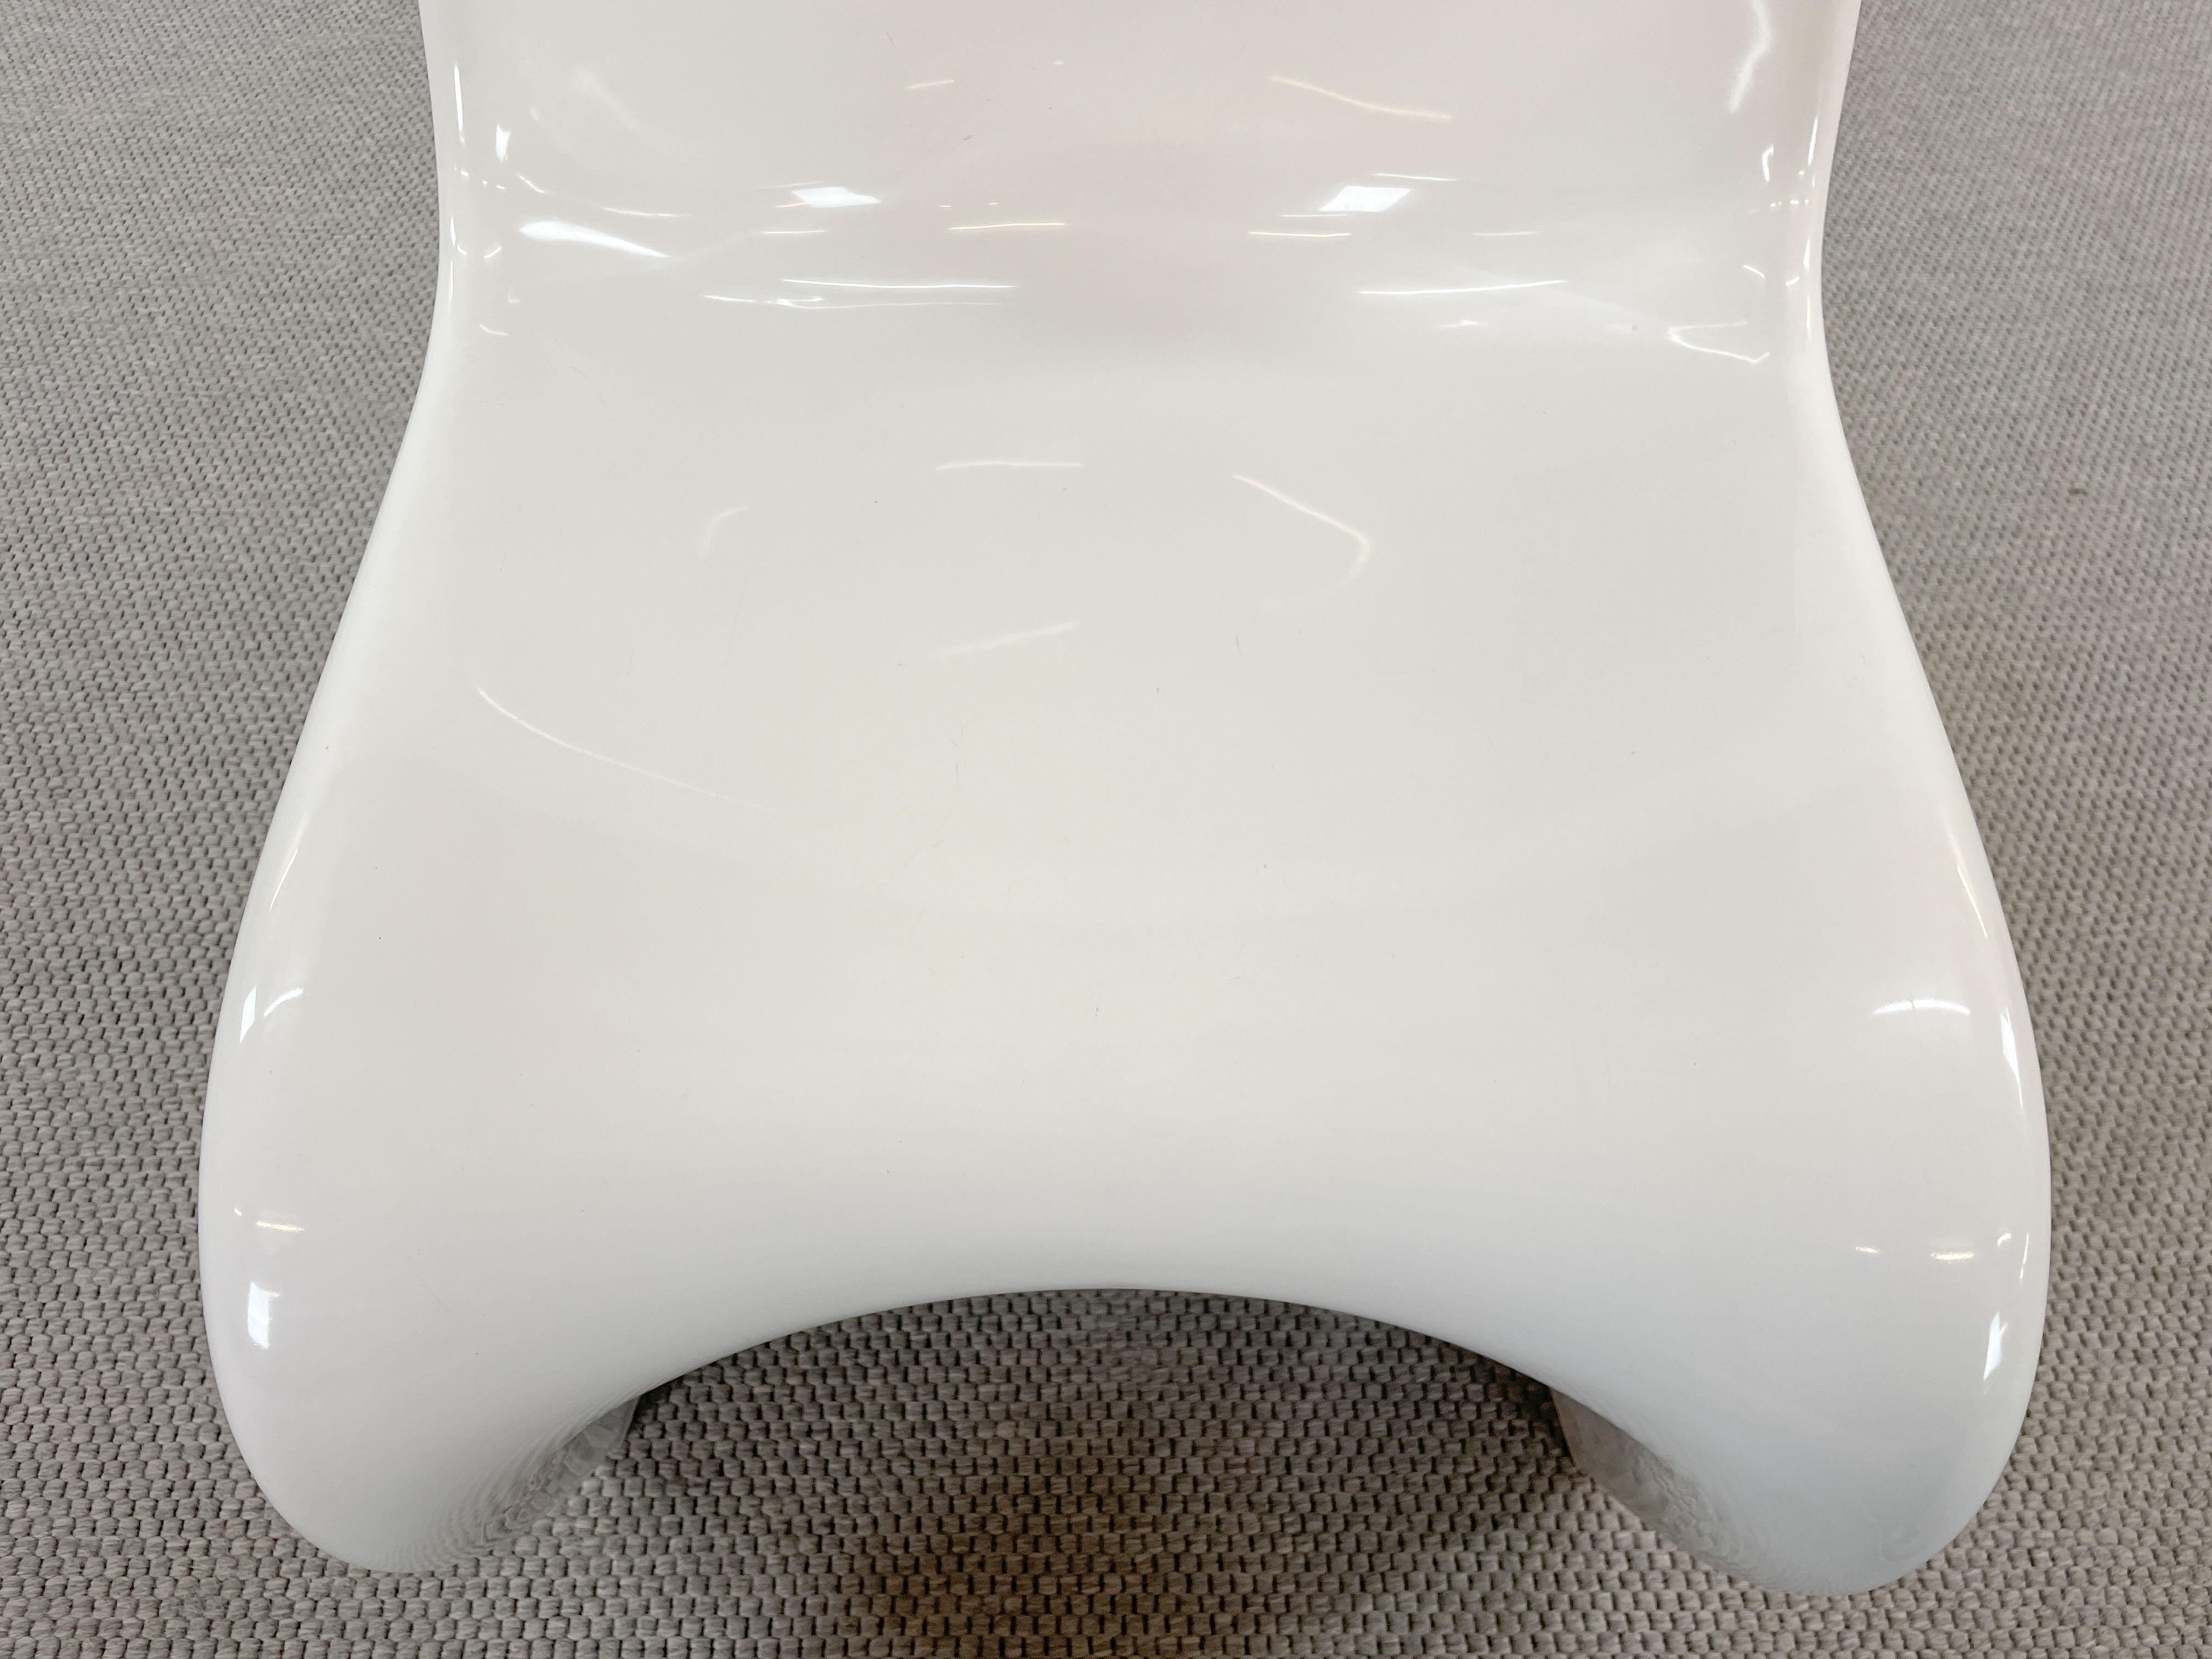 Panton Chair by Verner Panton for Herman Miller / Fehlbaum, in white 1976 For Sale 5